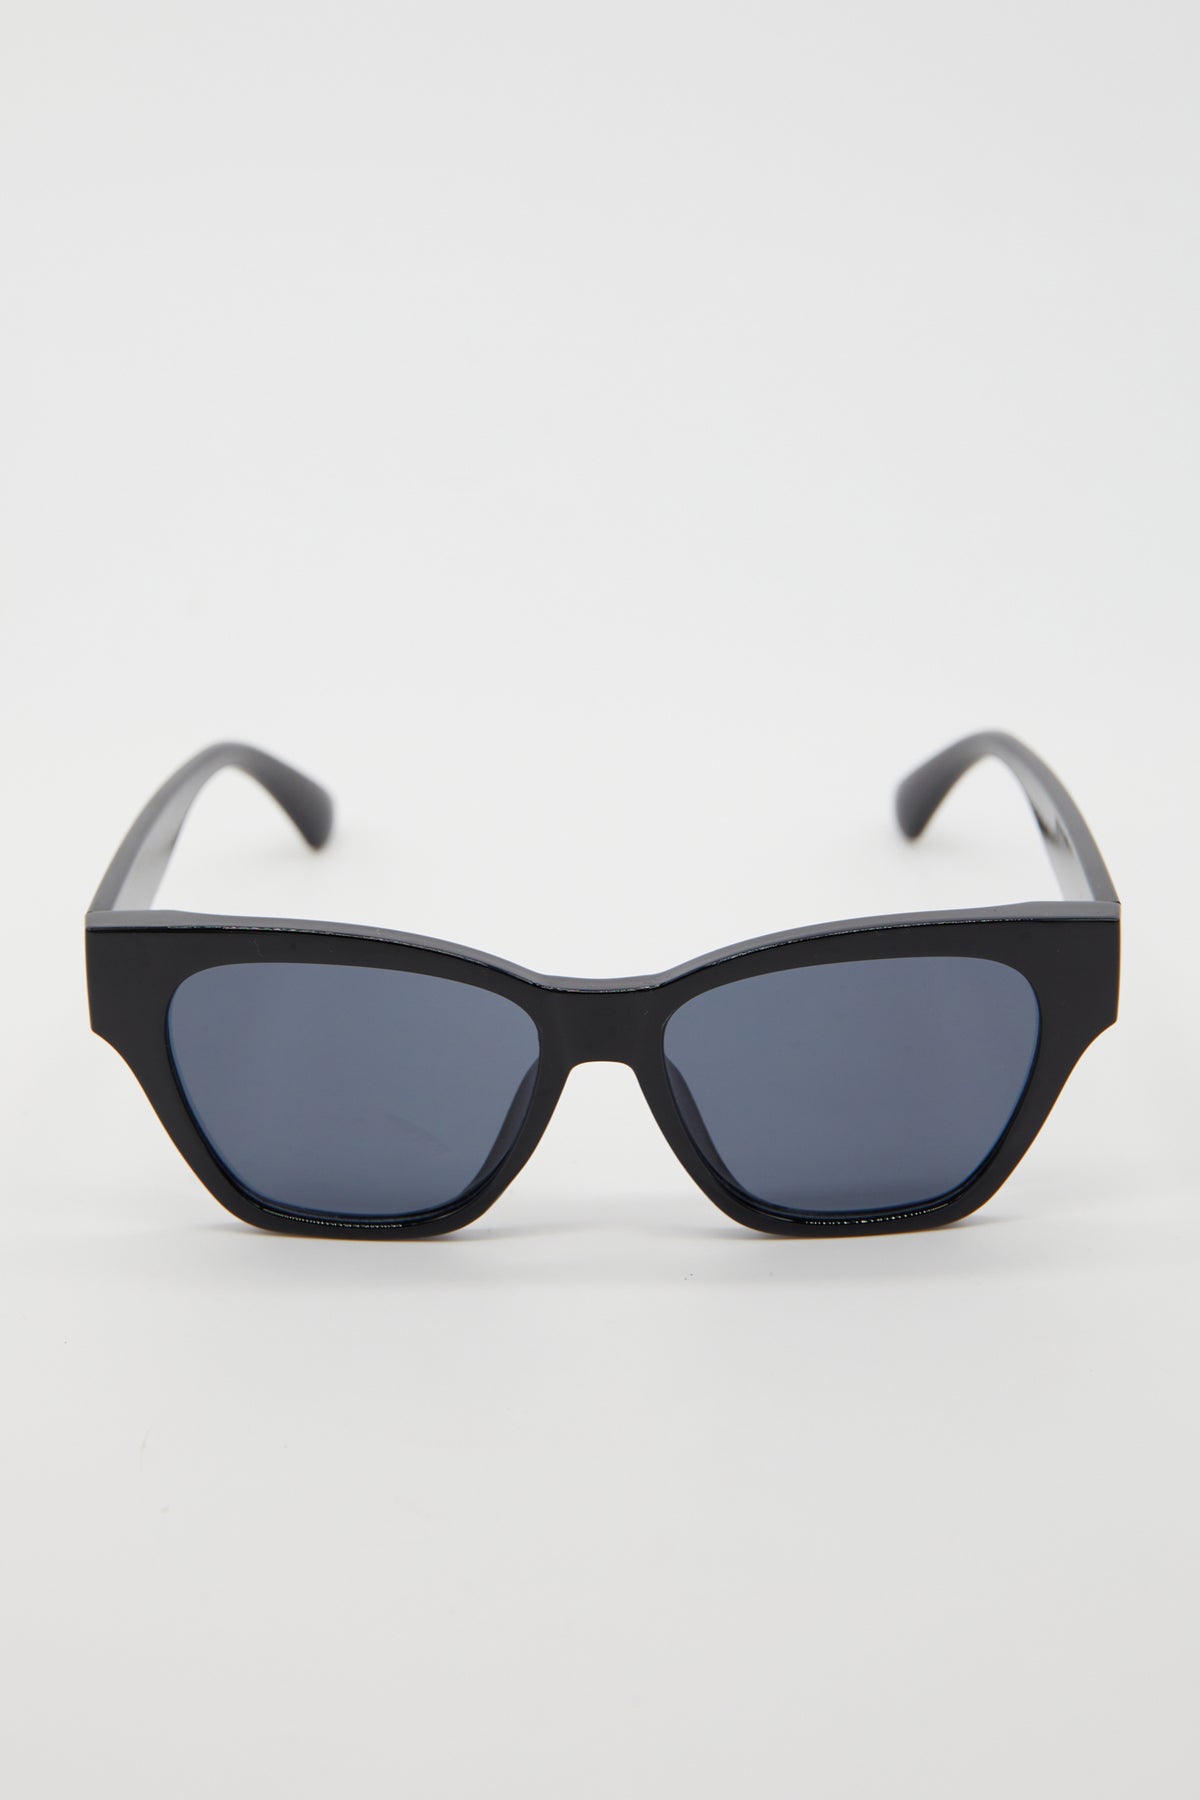 Carlotta Black Sunglasses